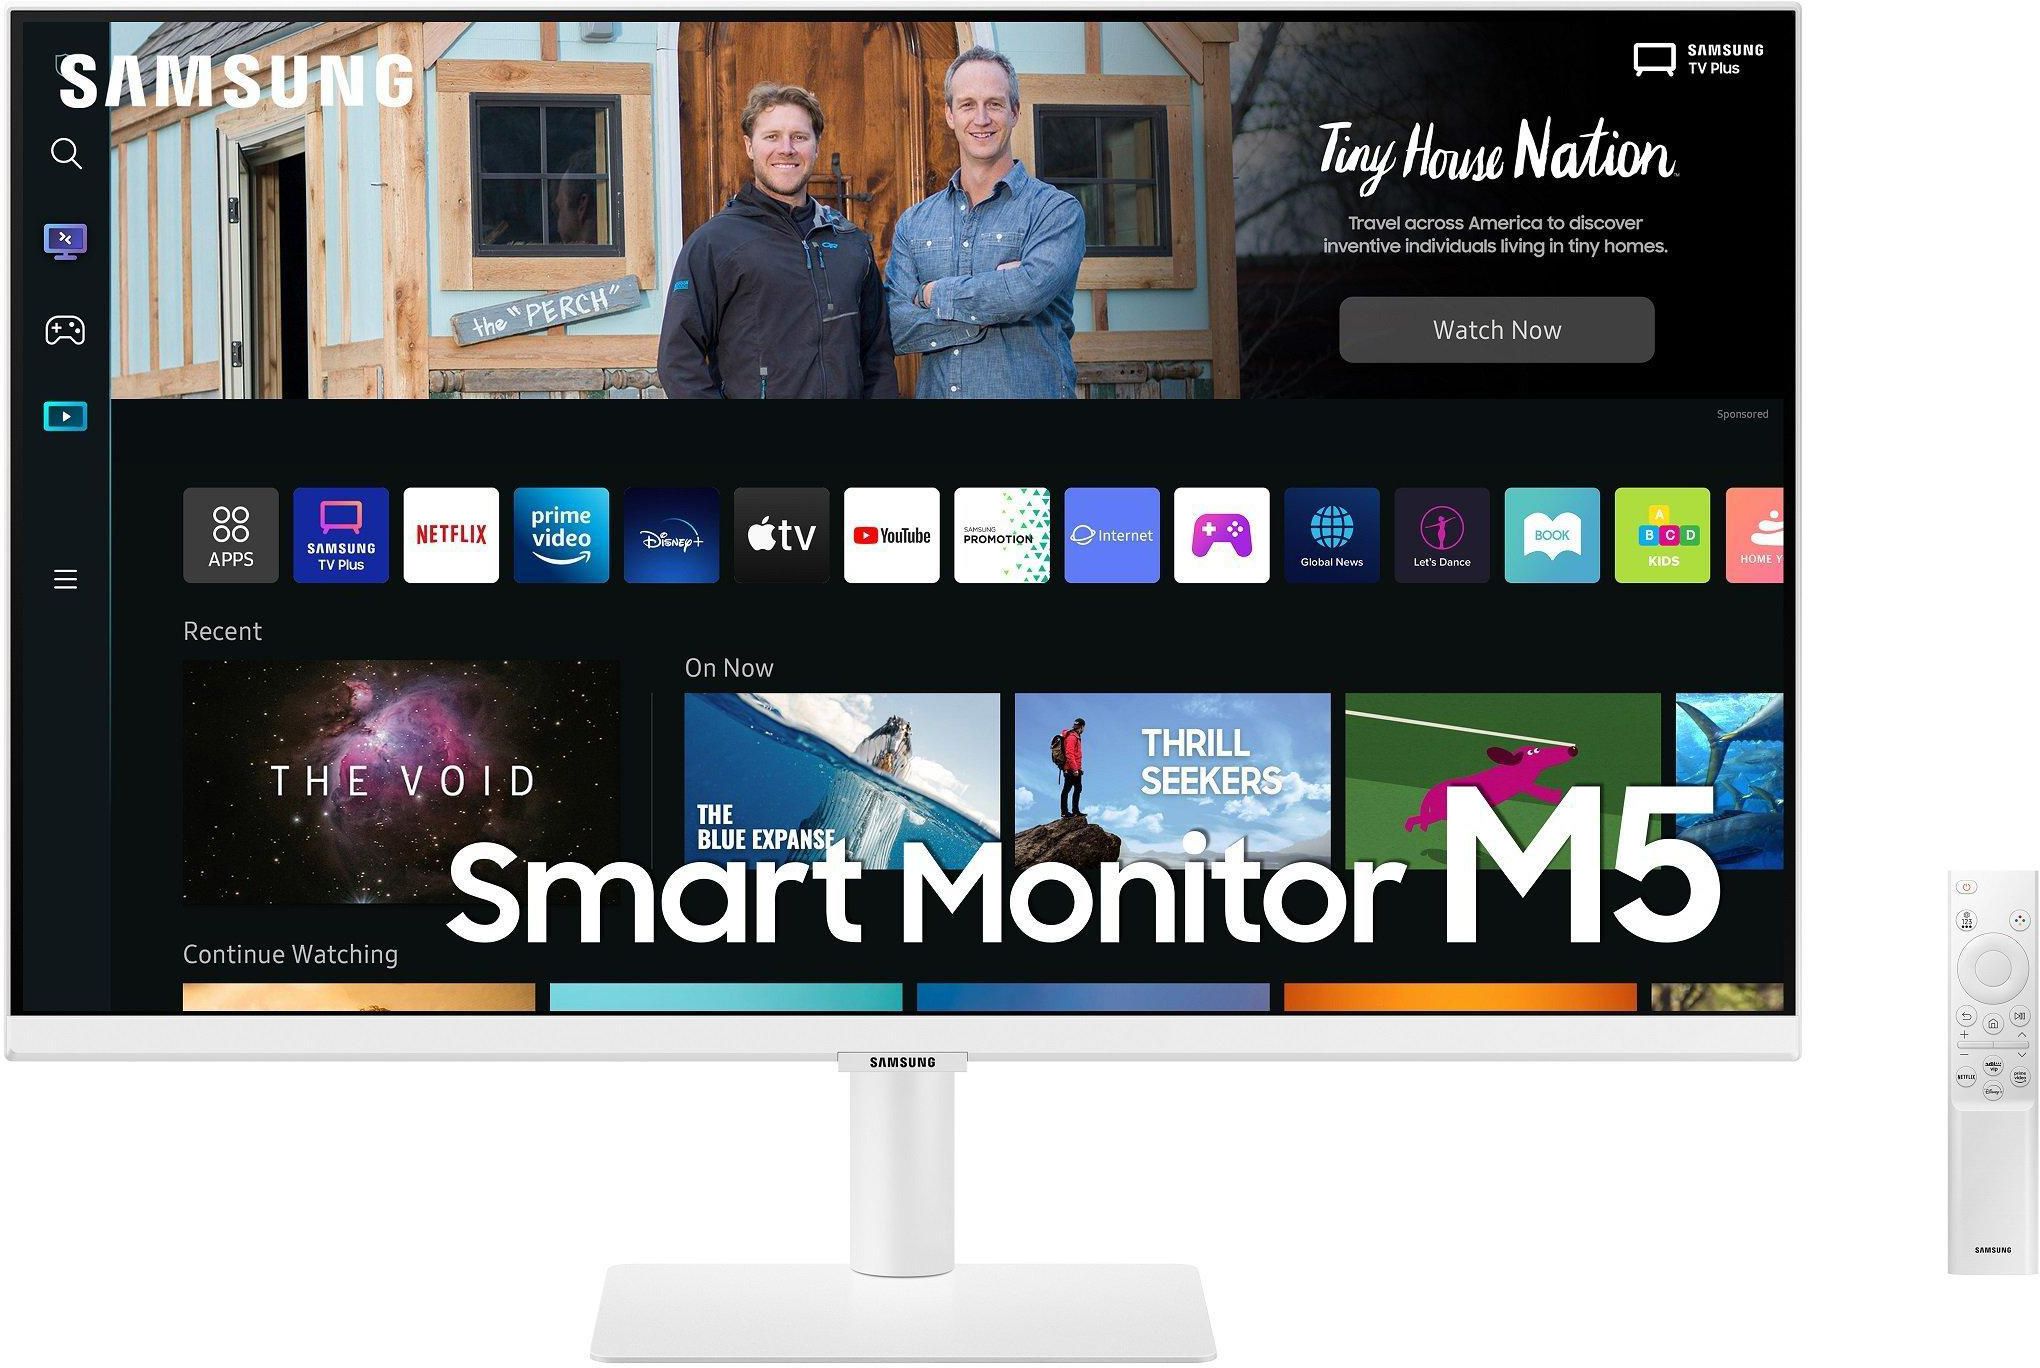 SAMSUNG Flat Smart Monitor M5, 27 inch, White